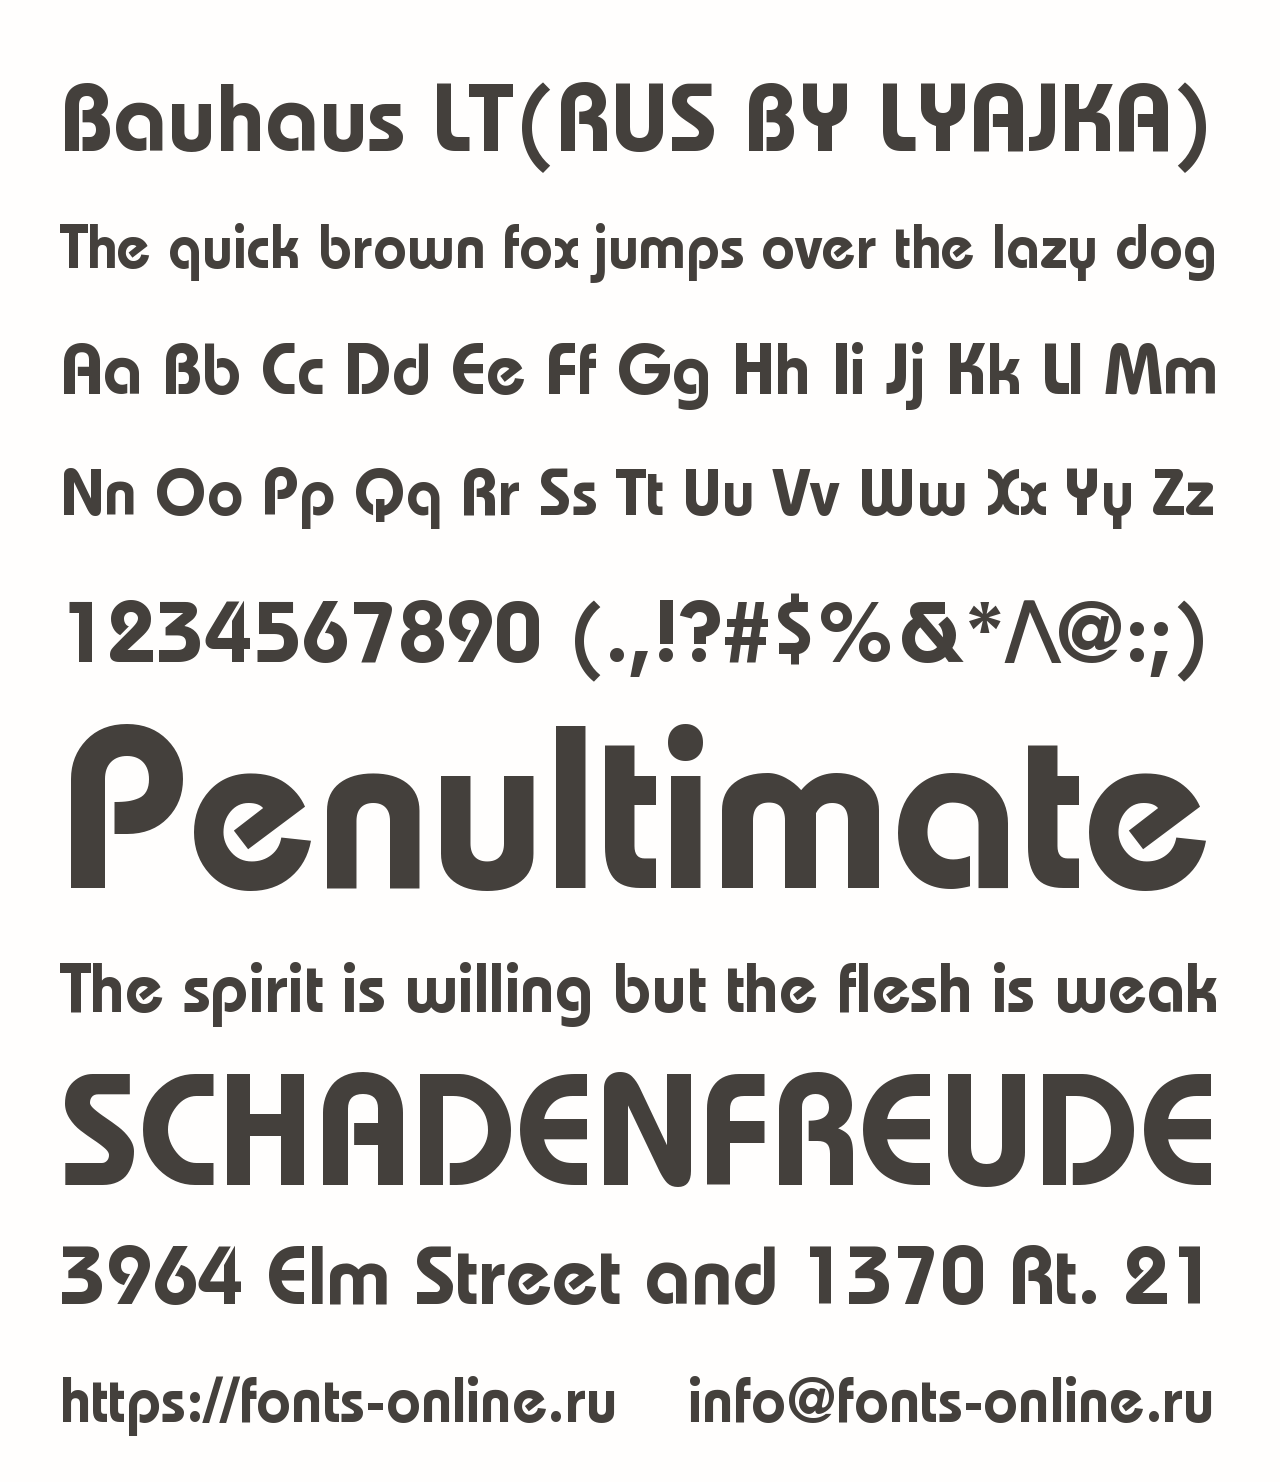 Font Bauhaus LT(RUS BY LYAJKA)